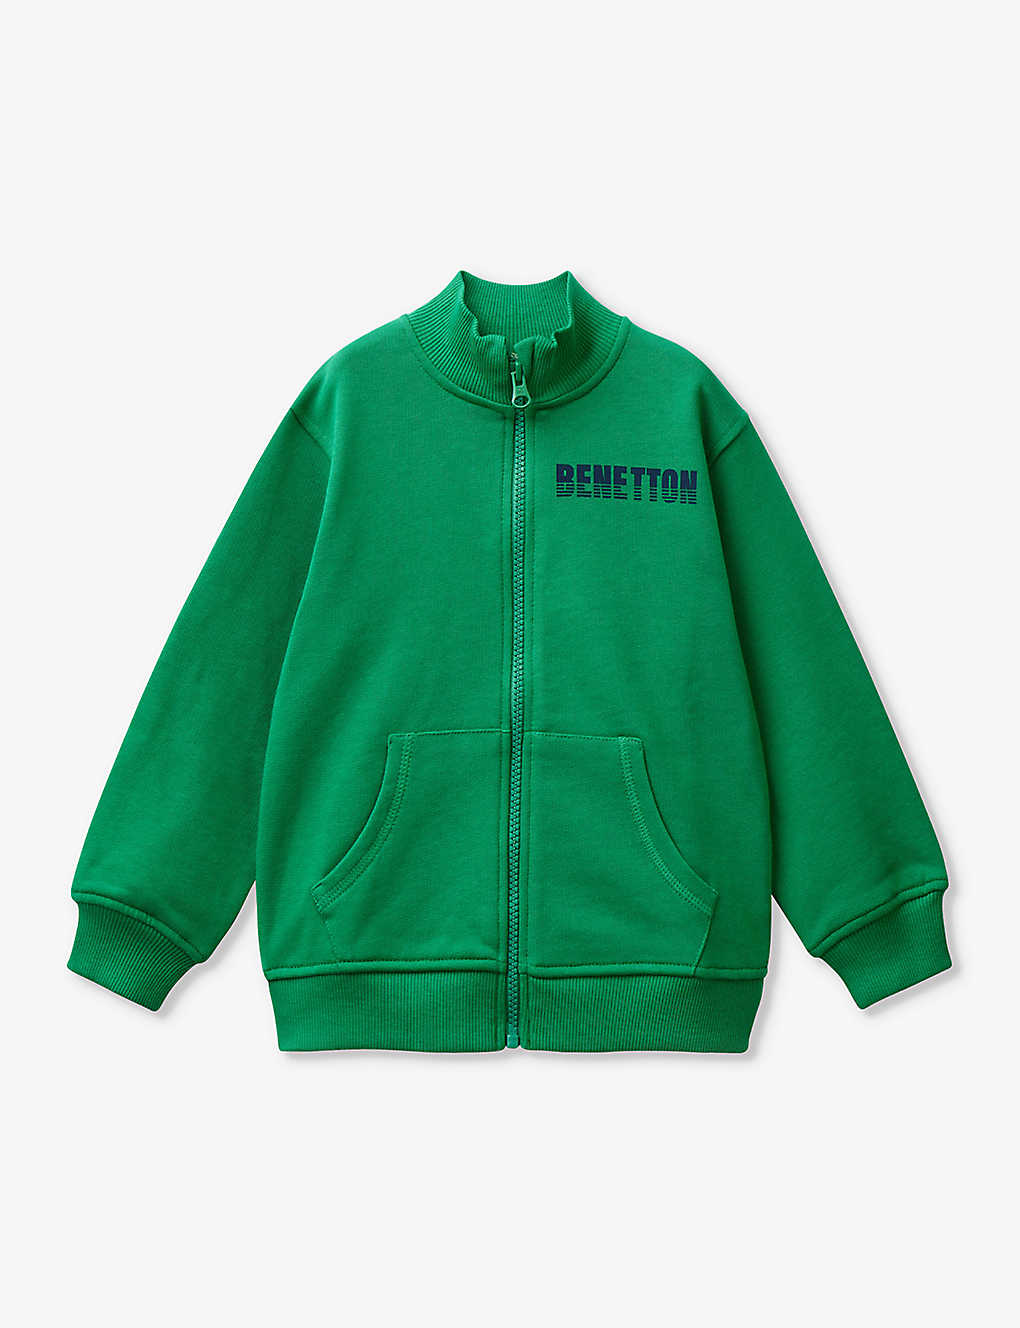 Benetton Green